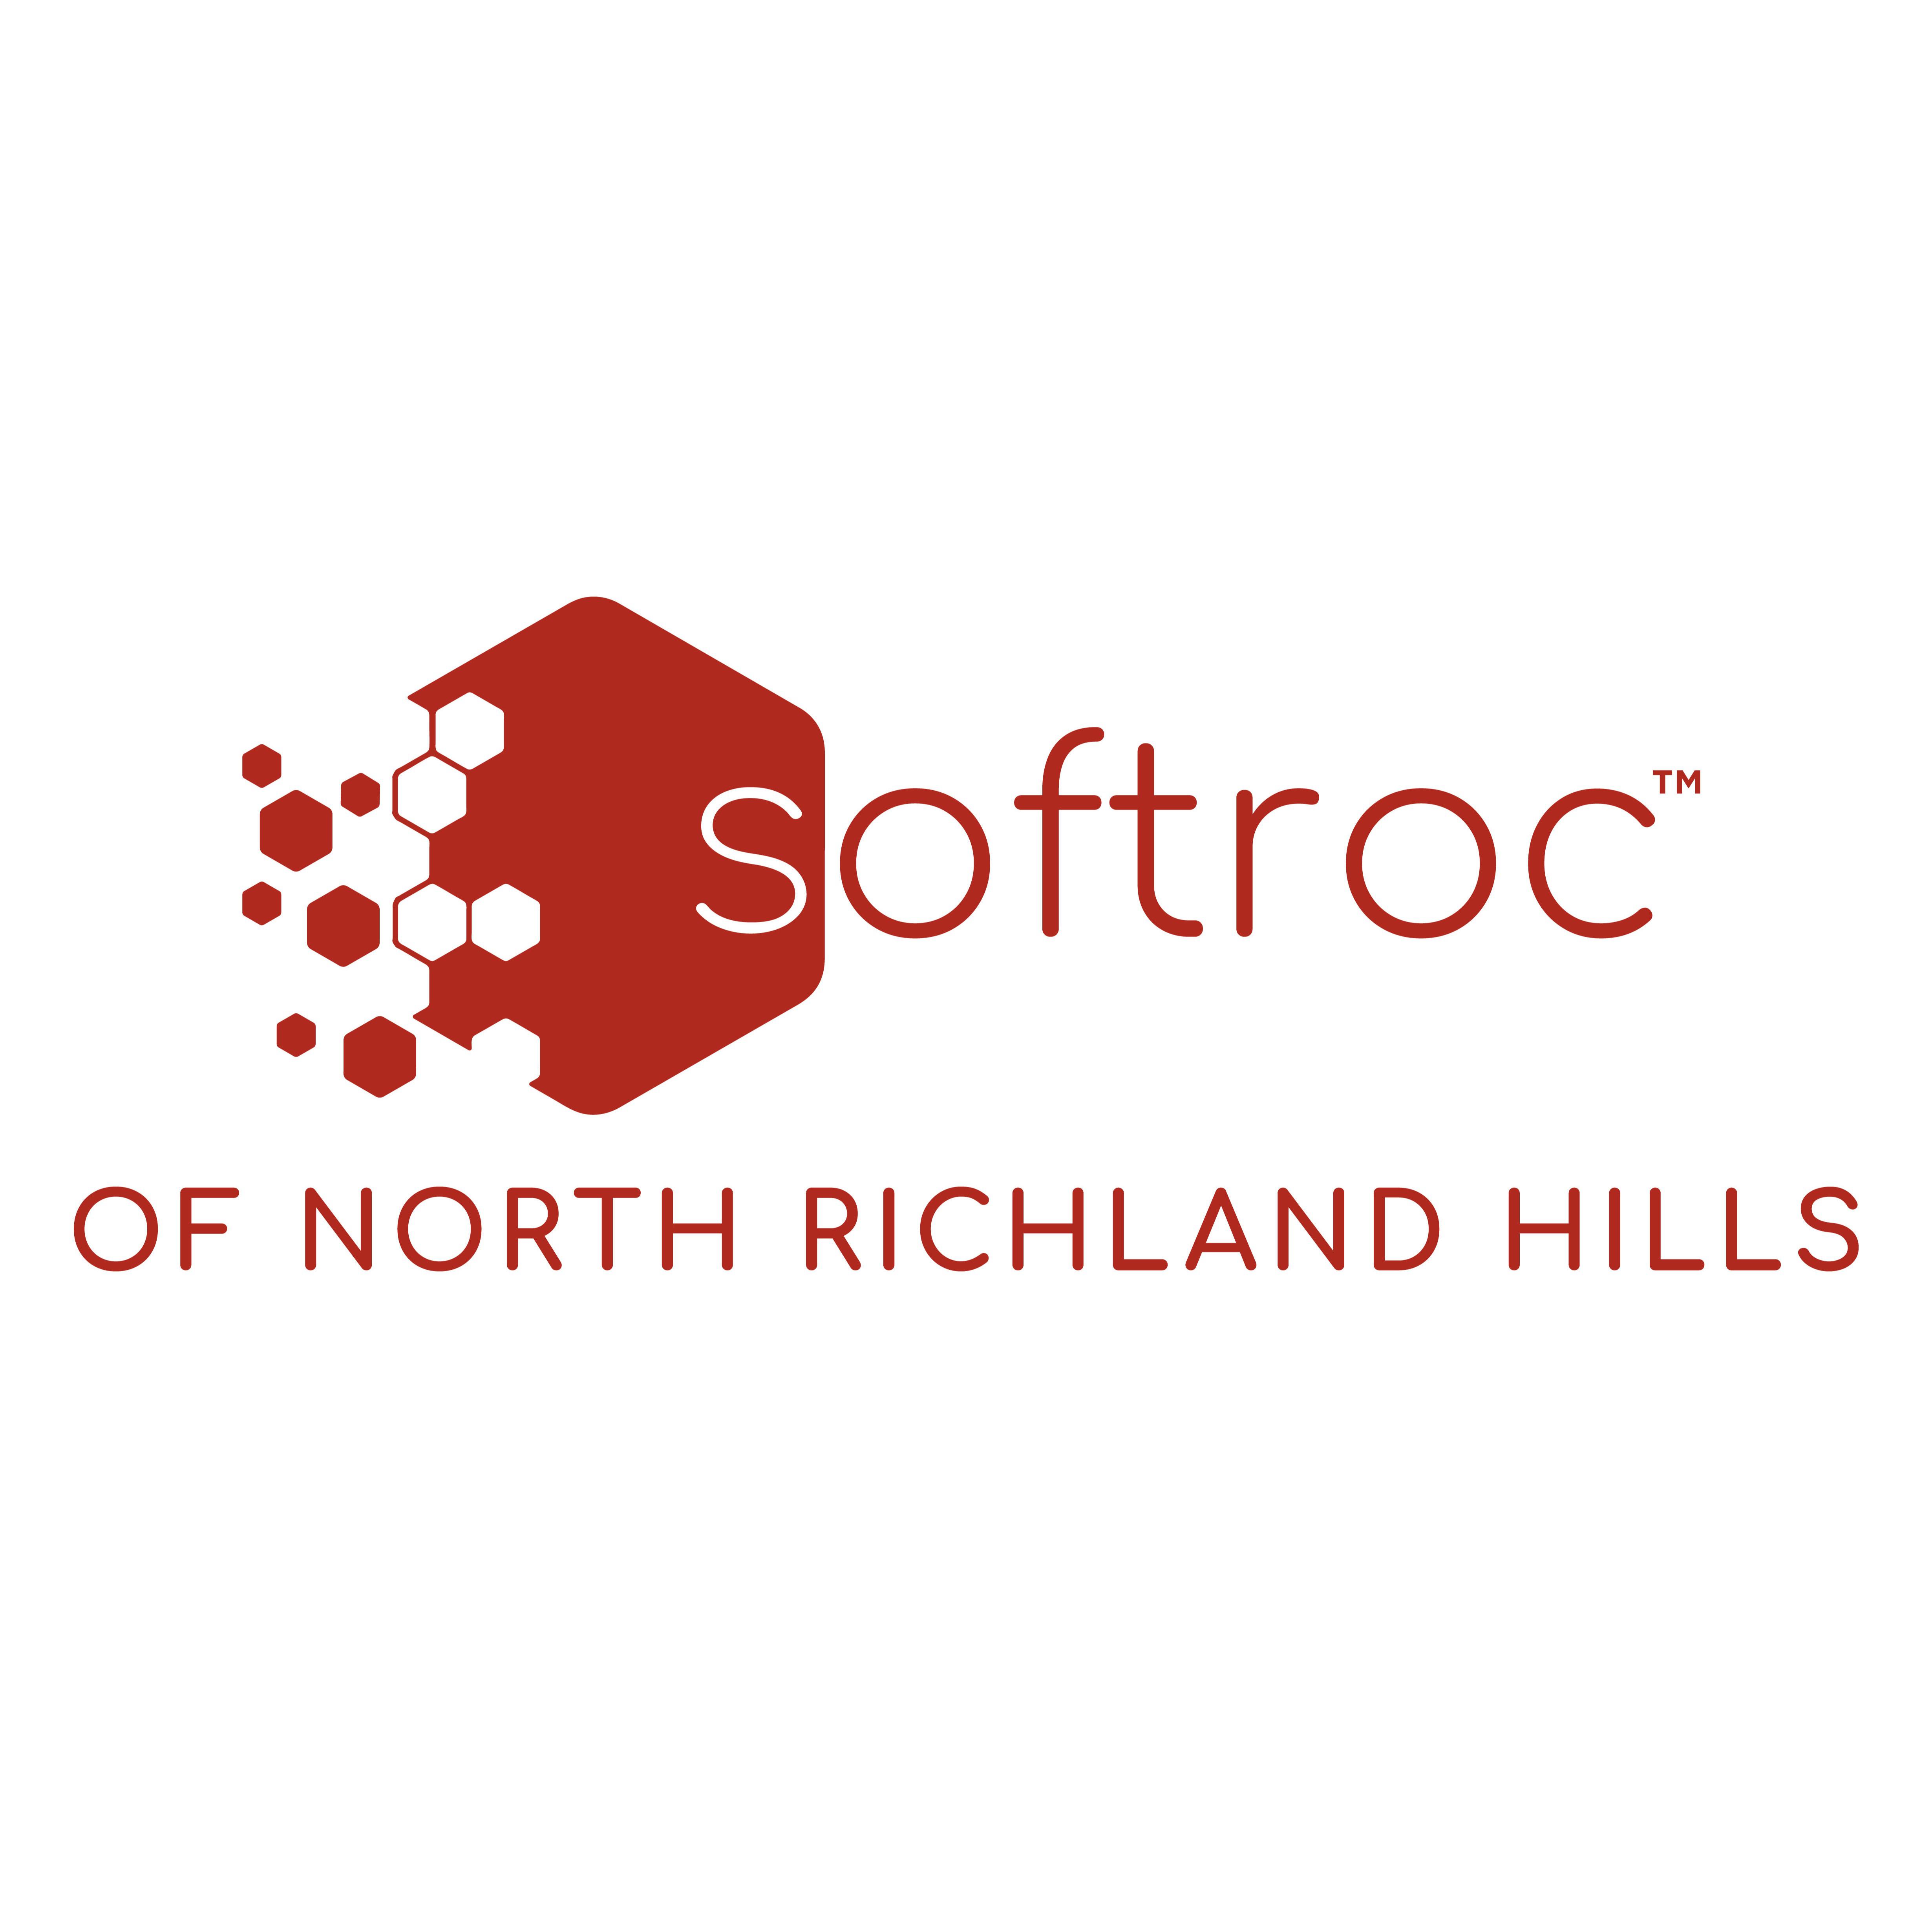 Softroc of North Richland Hills